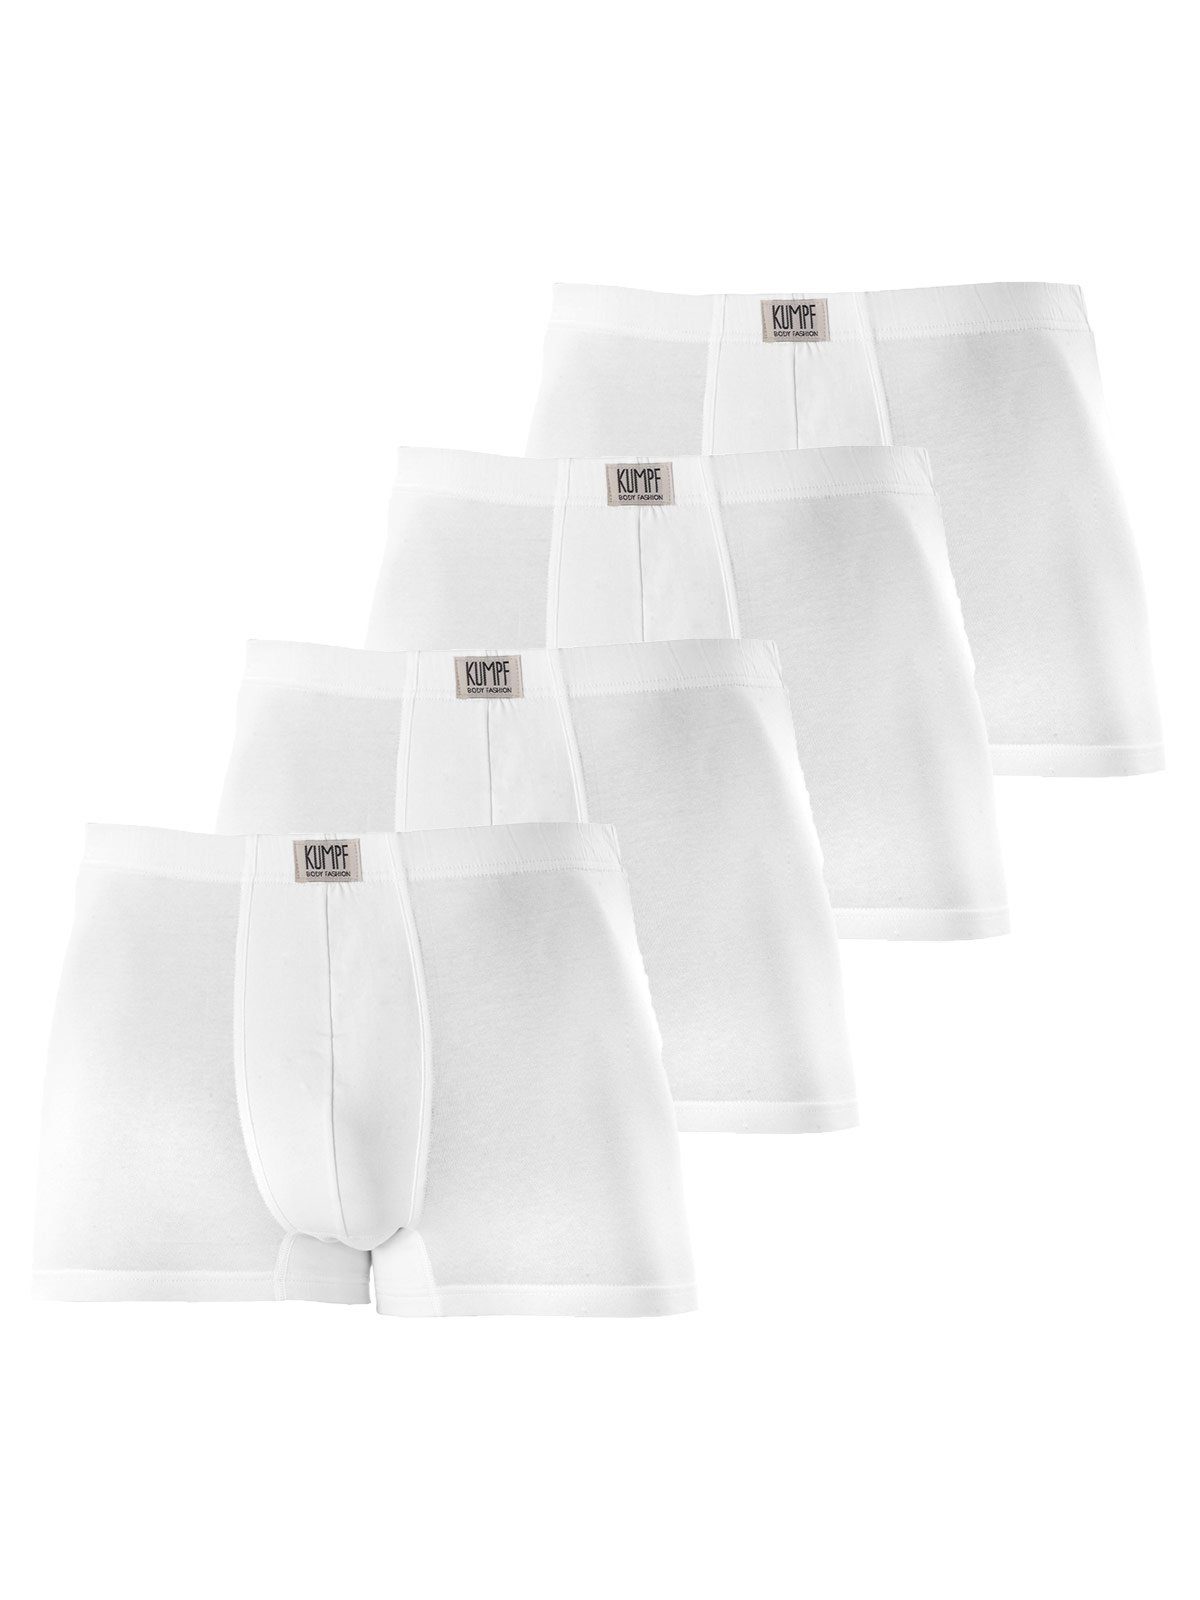 KUMPF Retro Pants 4er Sparpack Herren Pants Bio Cotton (Spar-Set, 4-St) hohe Markenqualität weiss